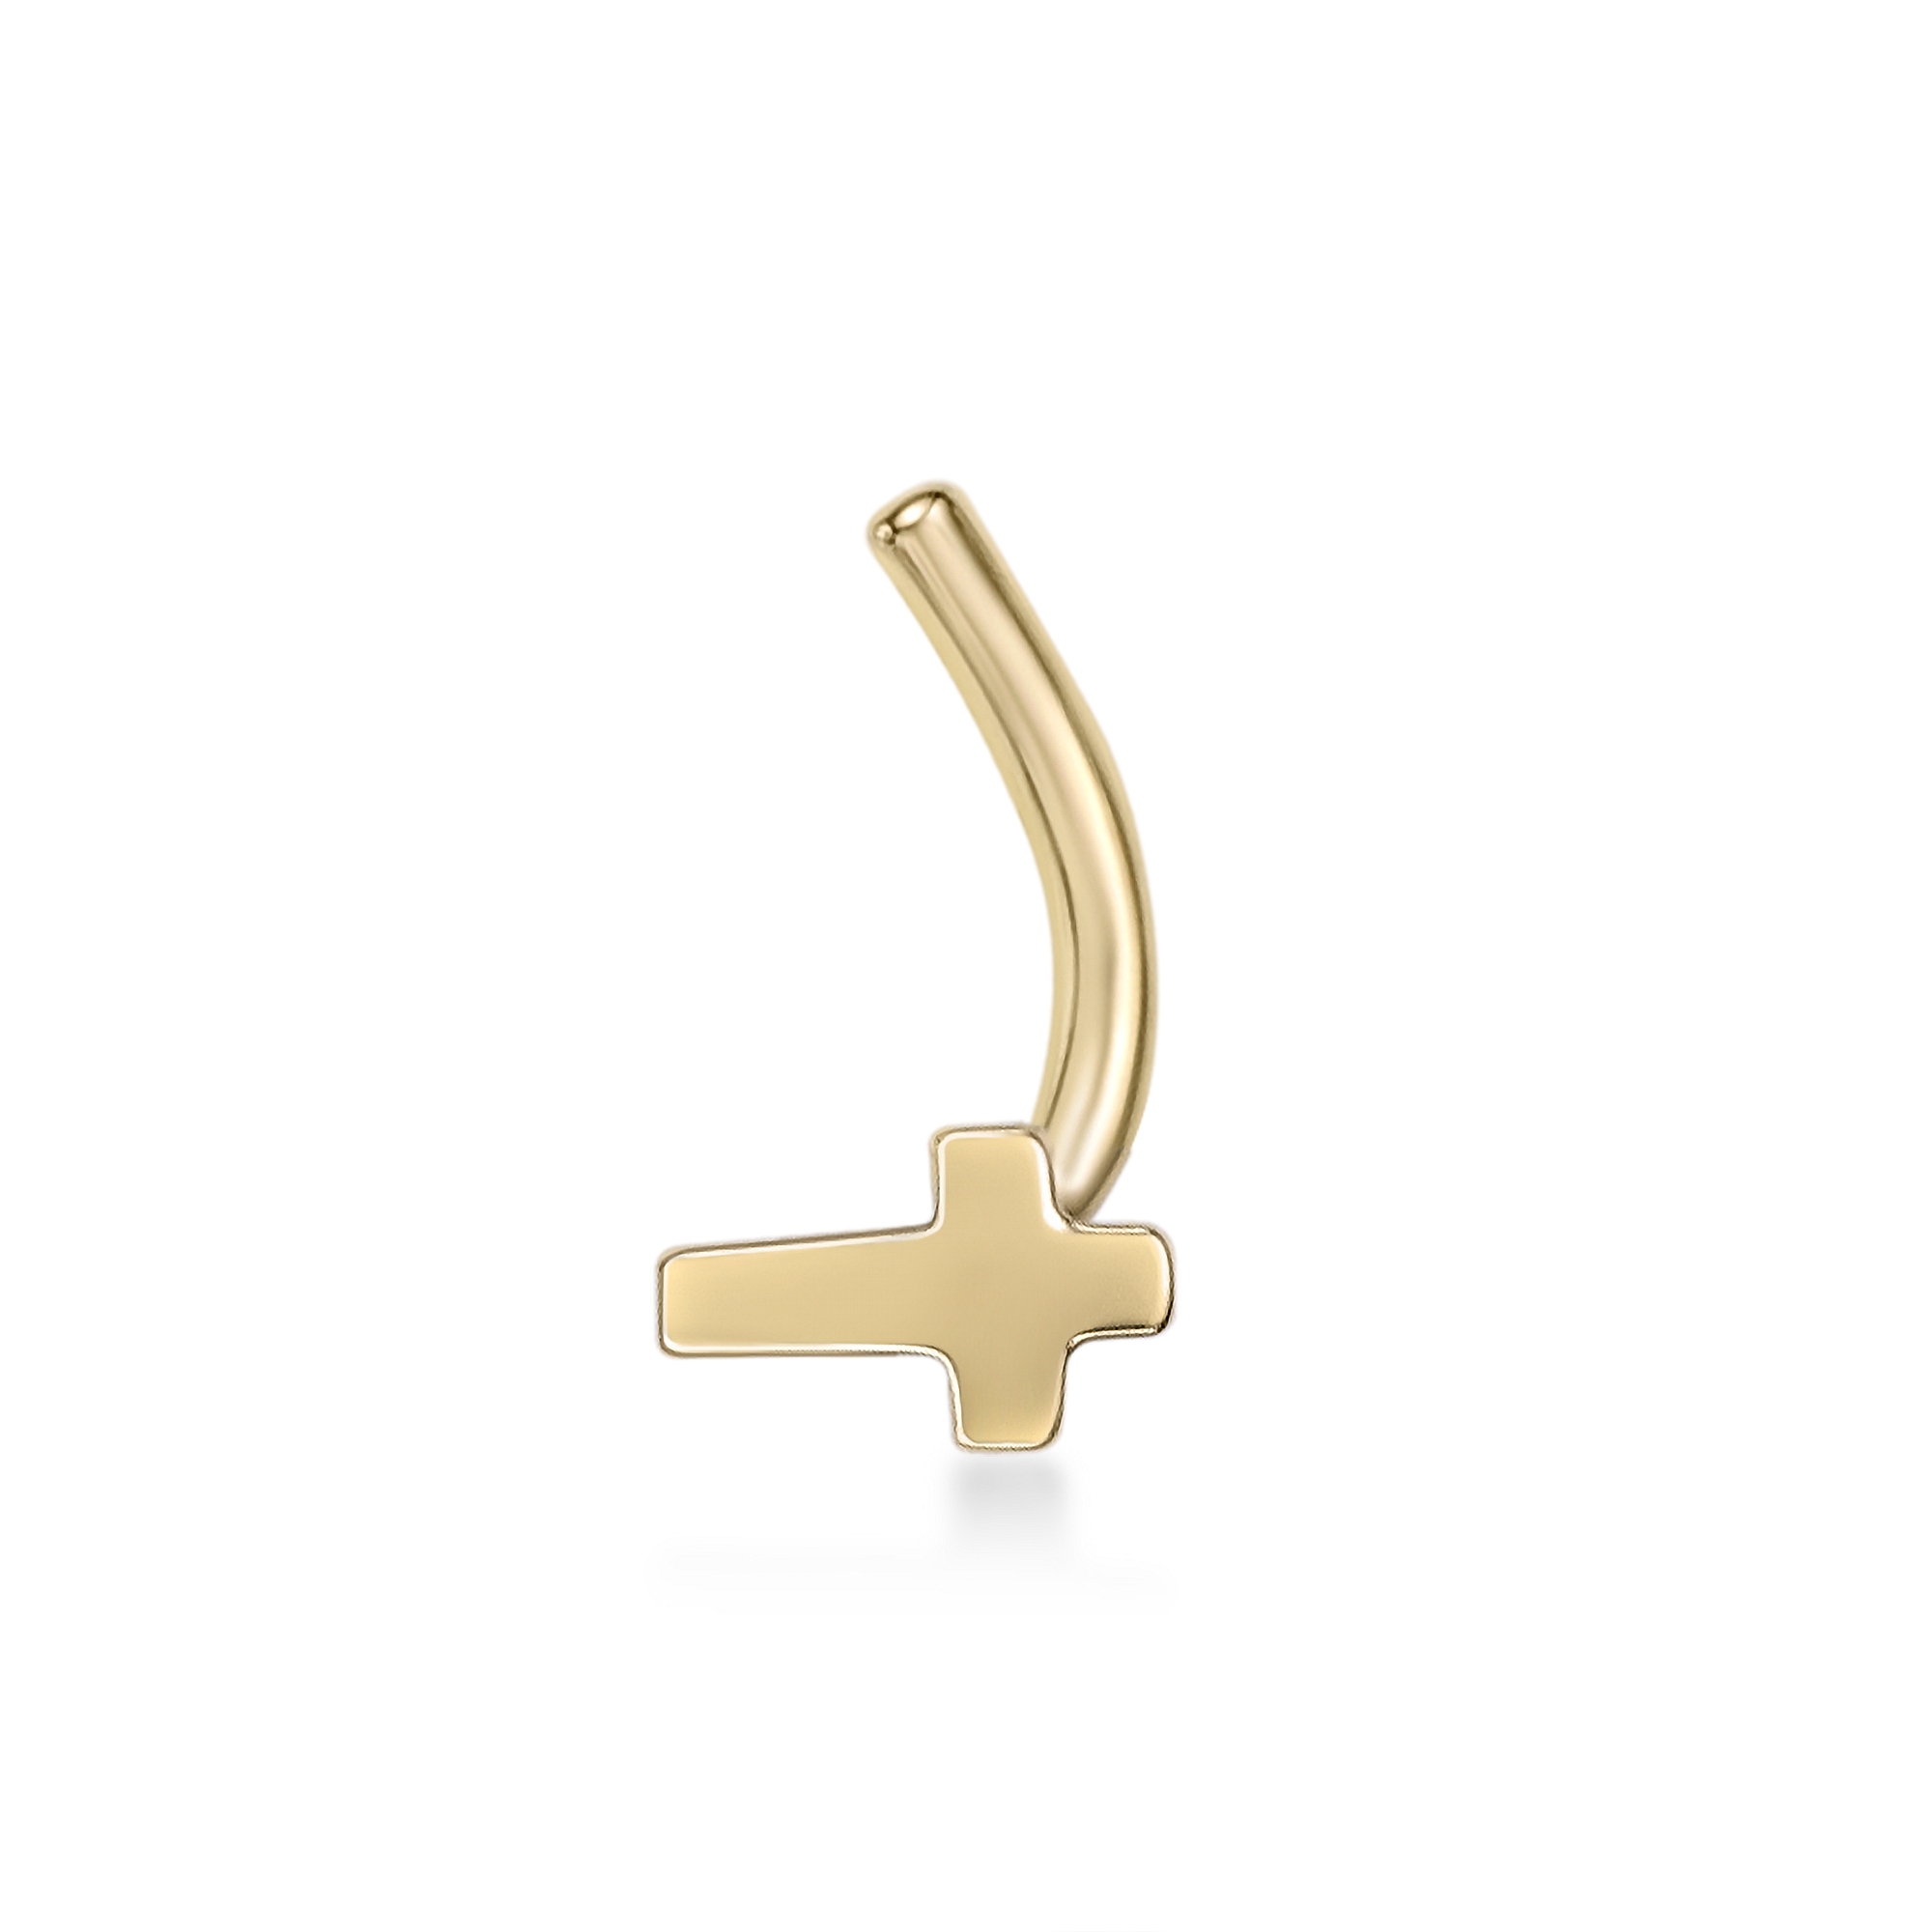 Lavari Jewelers Women's 3.5 MM Cross Curved Nose Ring, 14K Yellow Gold, 20 Gauge